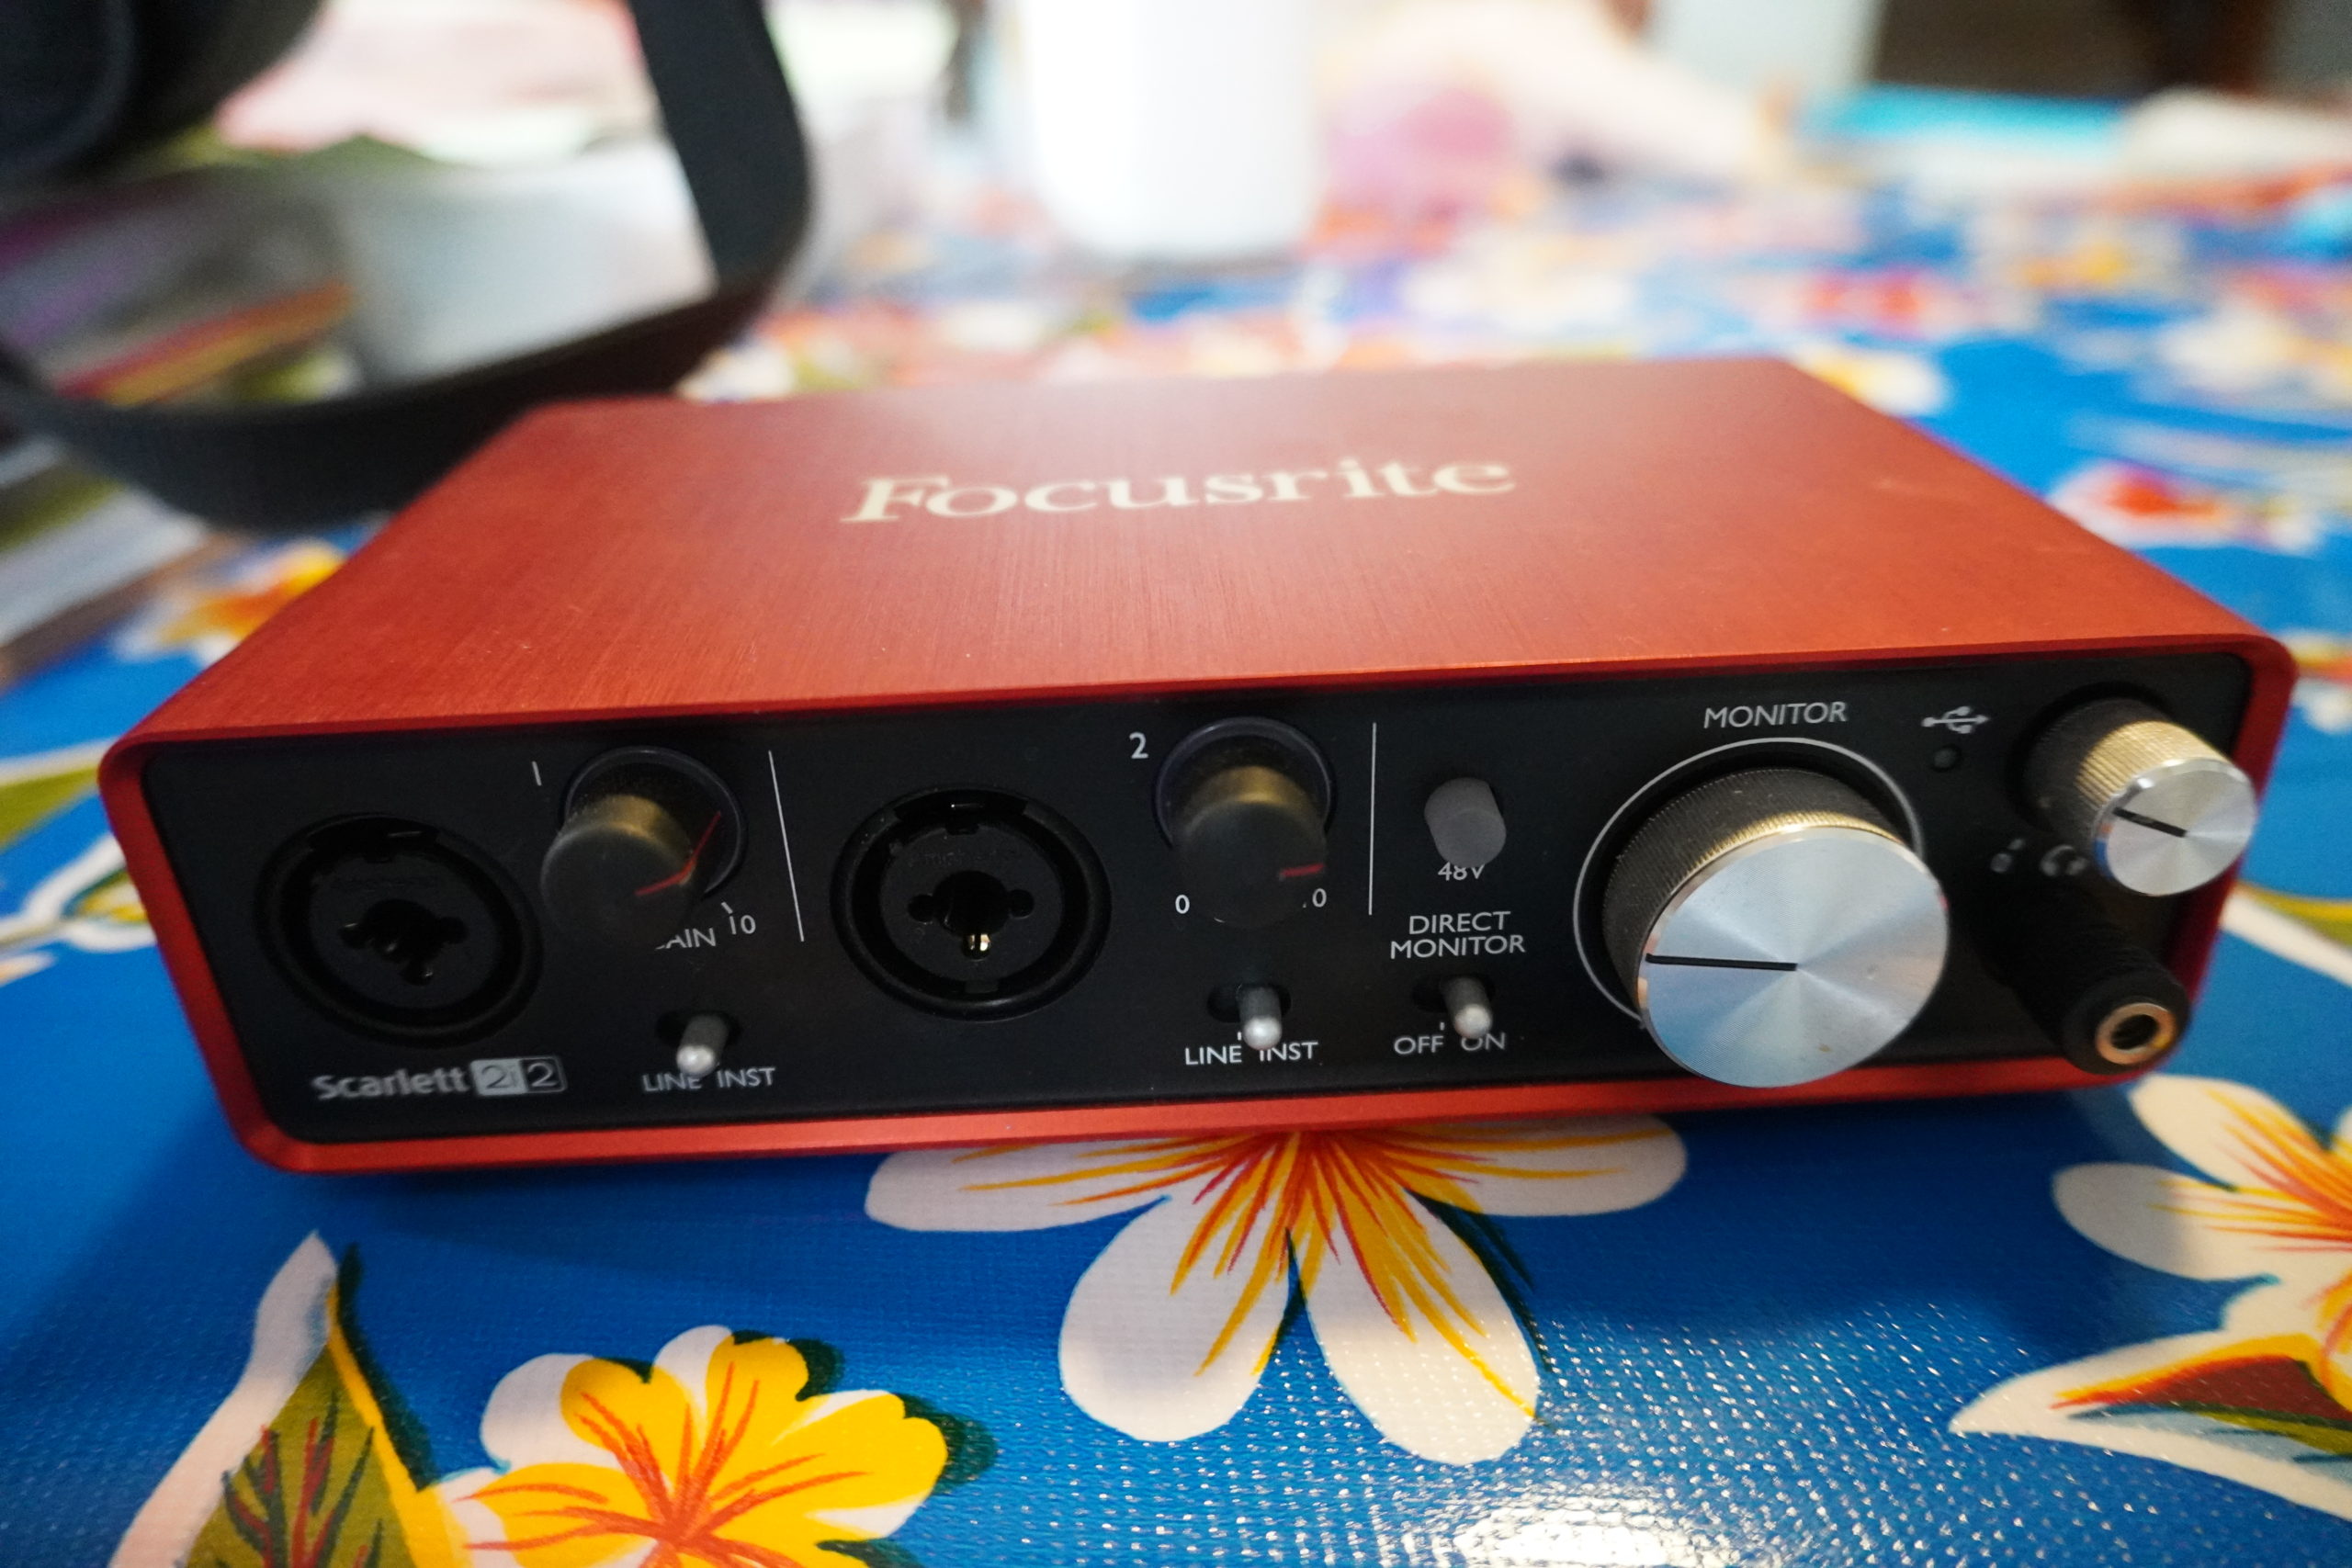 Focusrite Scarlett Solo 3rd Gen USB Audio Interface — High-Fidelity, Studio  Quality Recording, Black/Red 